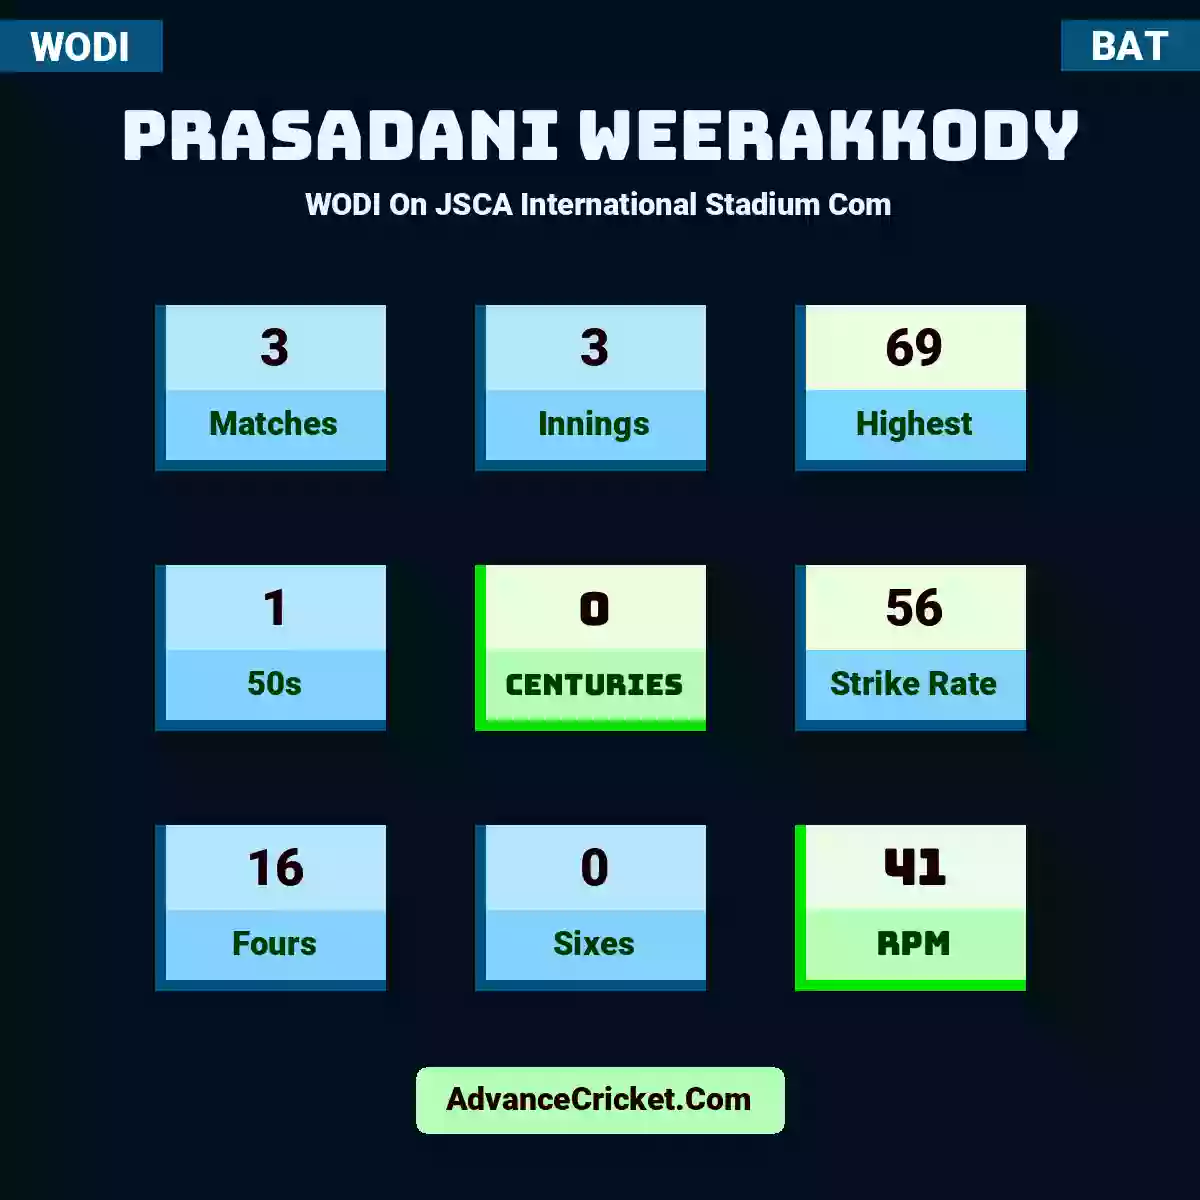 Prasadani Weerakkody WODI  On JSCA International Stadium Com, Prasadani Weerakkody played 3 matches, scored 69 runs as highest, 1 half-centuries, and 0 centuries, with a strike rate of 56. P.Weerakkody hit 16 fours and 0 sixes, with an RPM of 41.